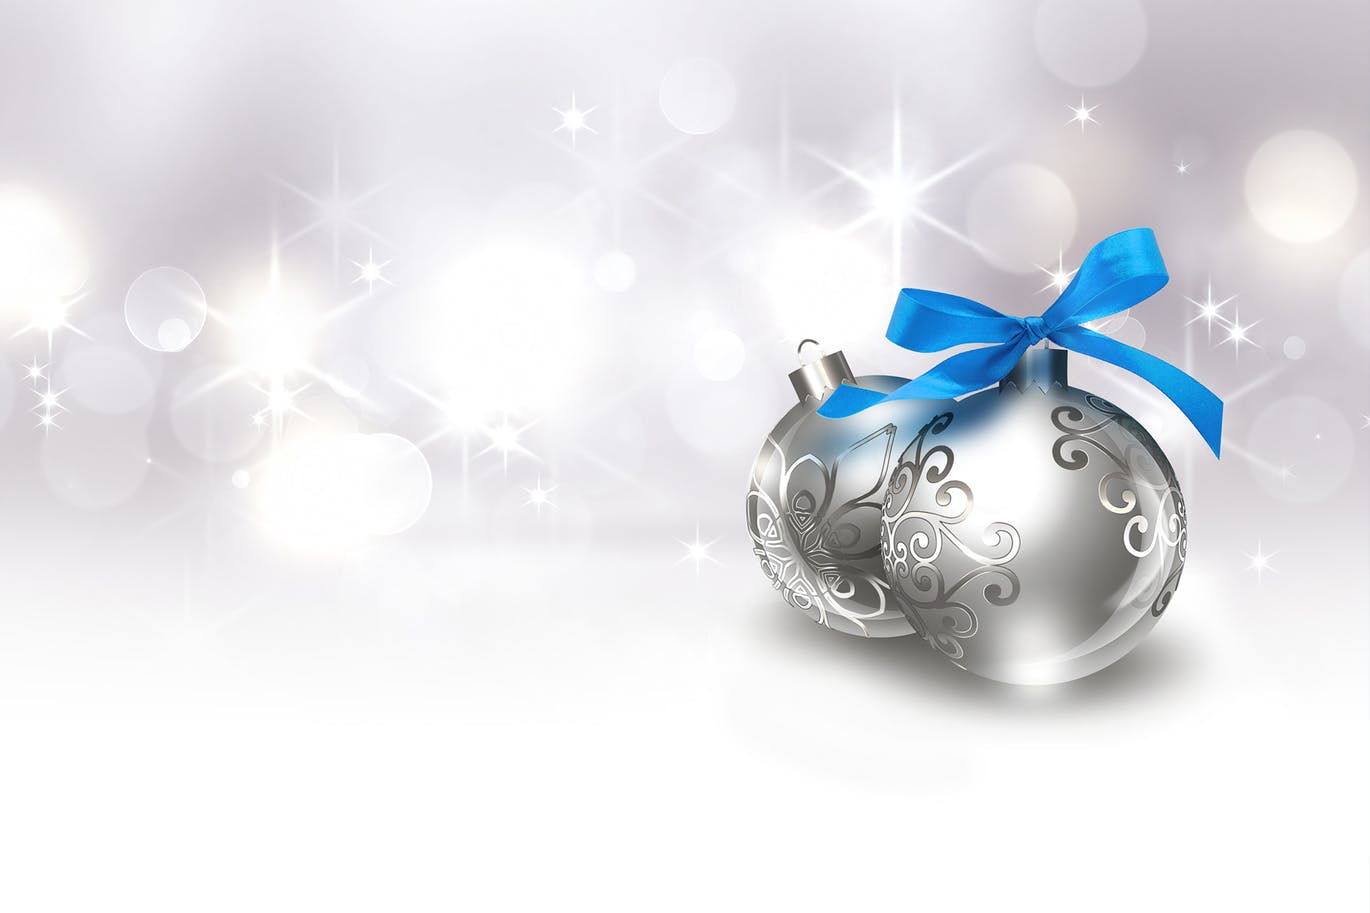 蓝色蝴蝶结圣诞球高清背景图素材 Christmas balls with blue bow插图